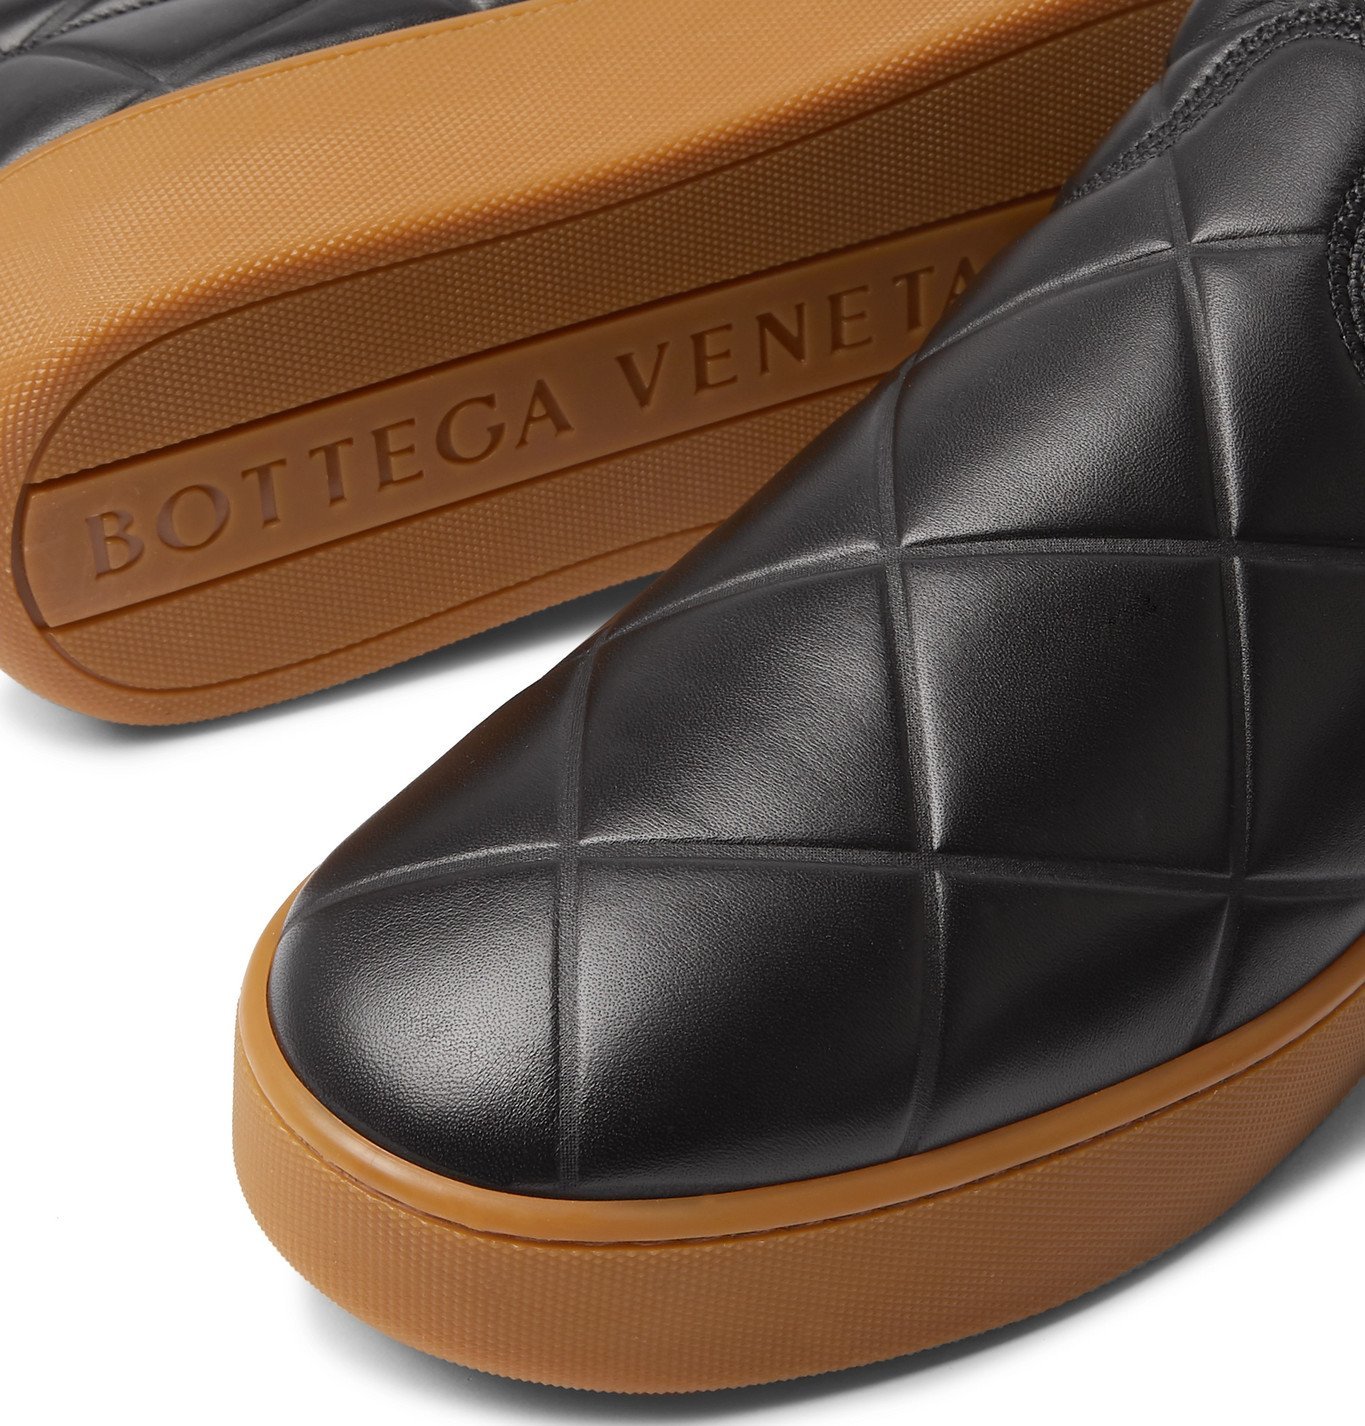 Bottega Veneta - Debossed Leather Slip-On Sneakers - Black Bottega Veneta